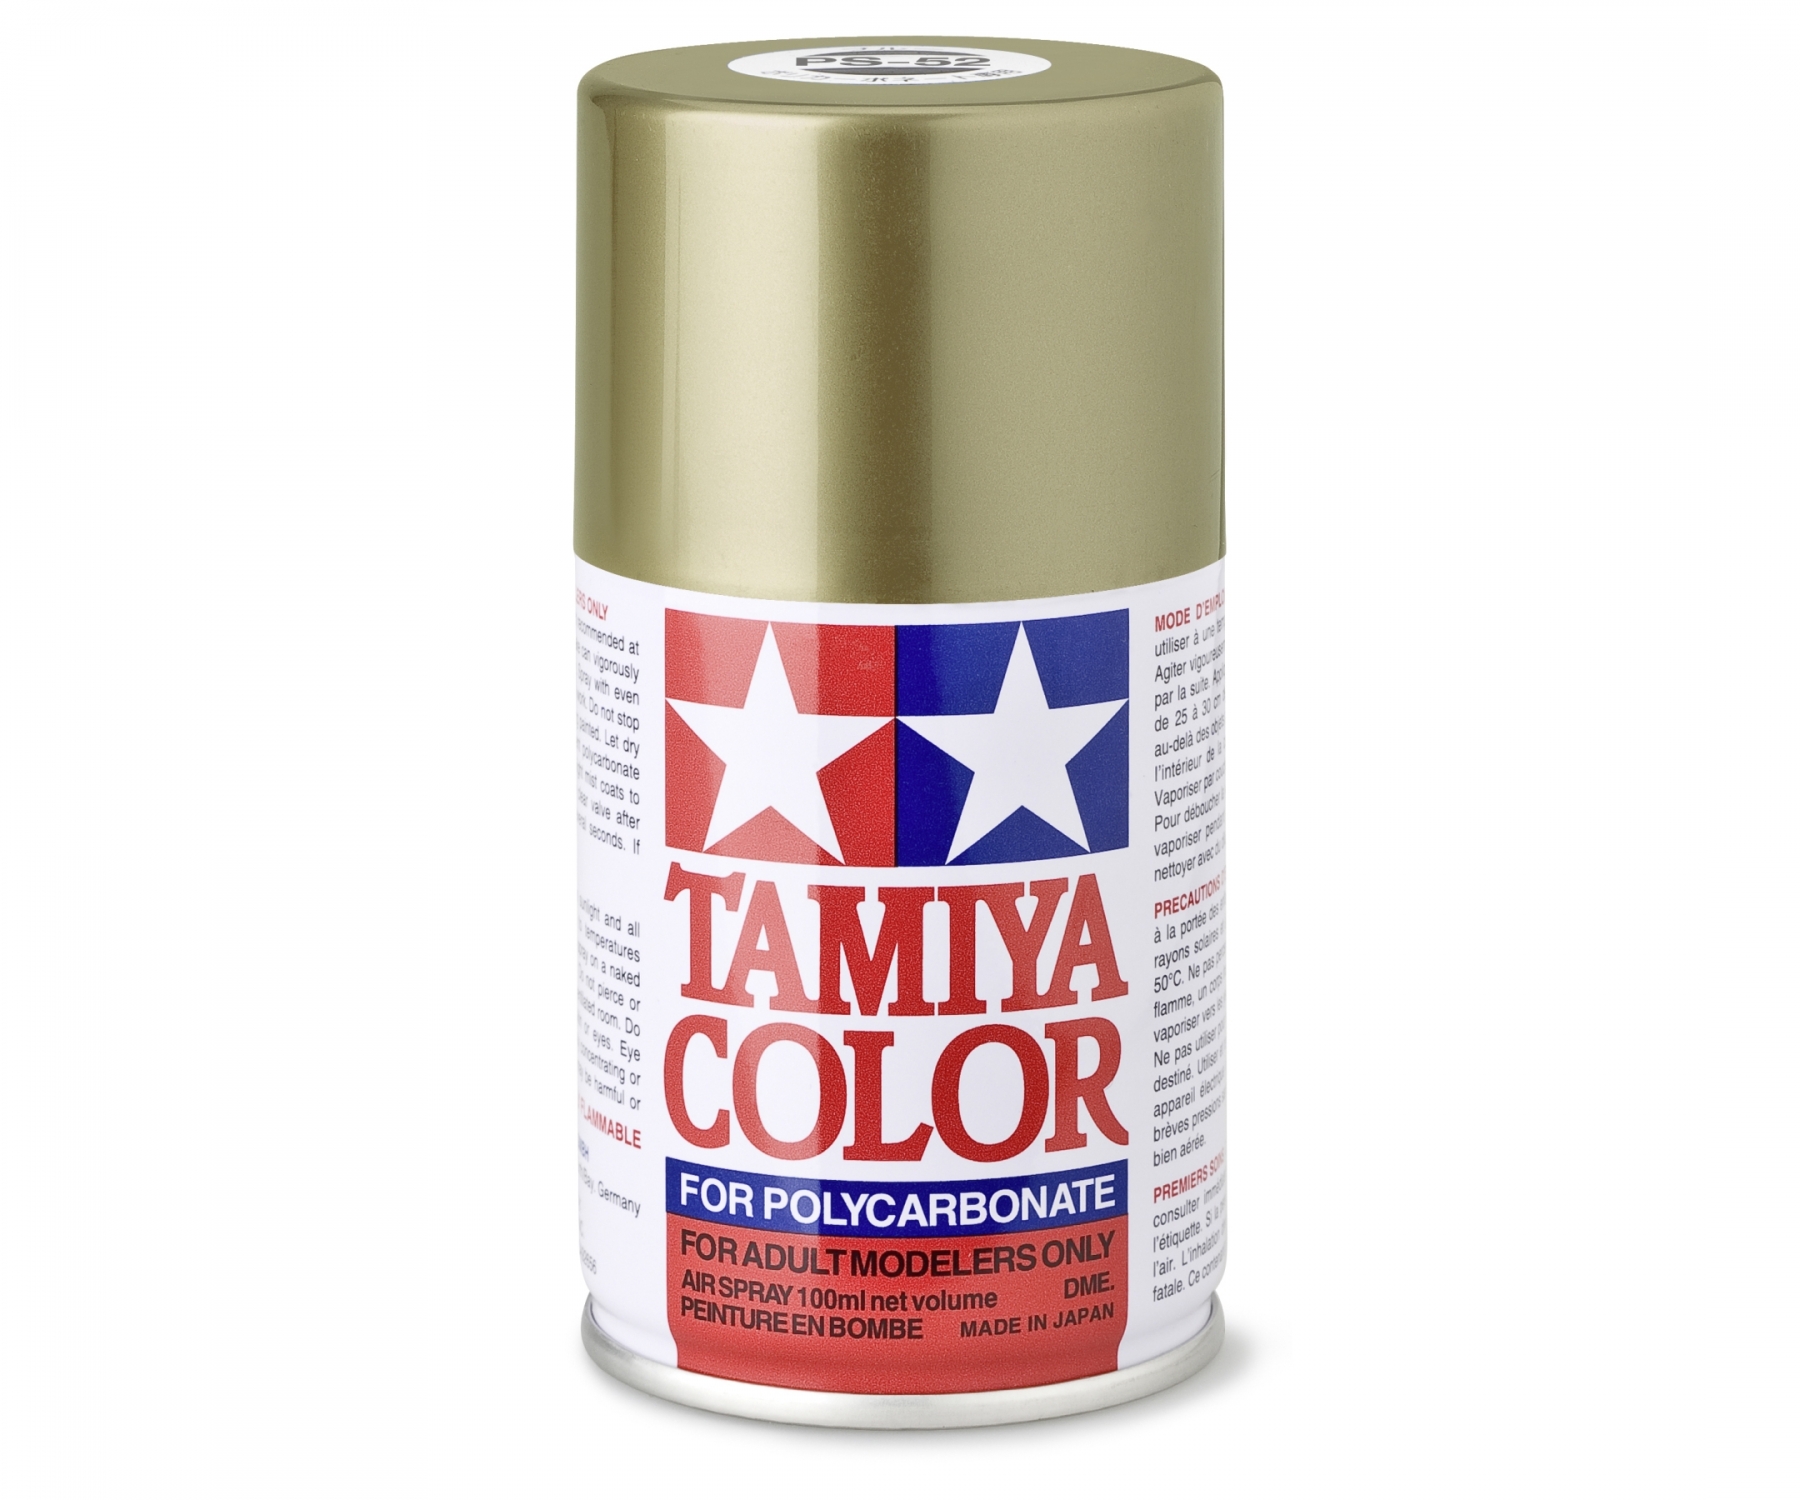 Tamiya Color Lexanspray Champagner, Gold-Effekt PS-52 100 ml Spraydose (L=184,90€)